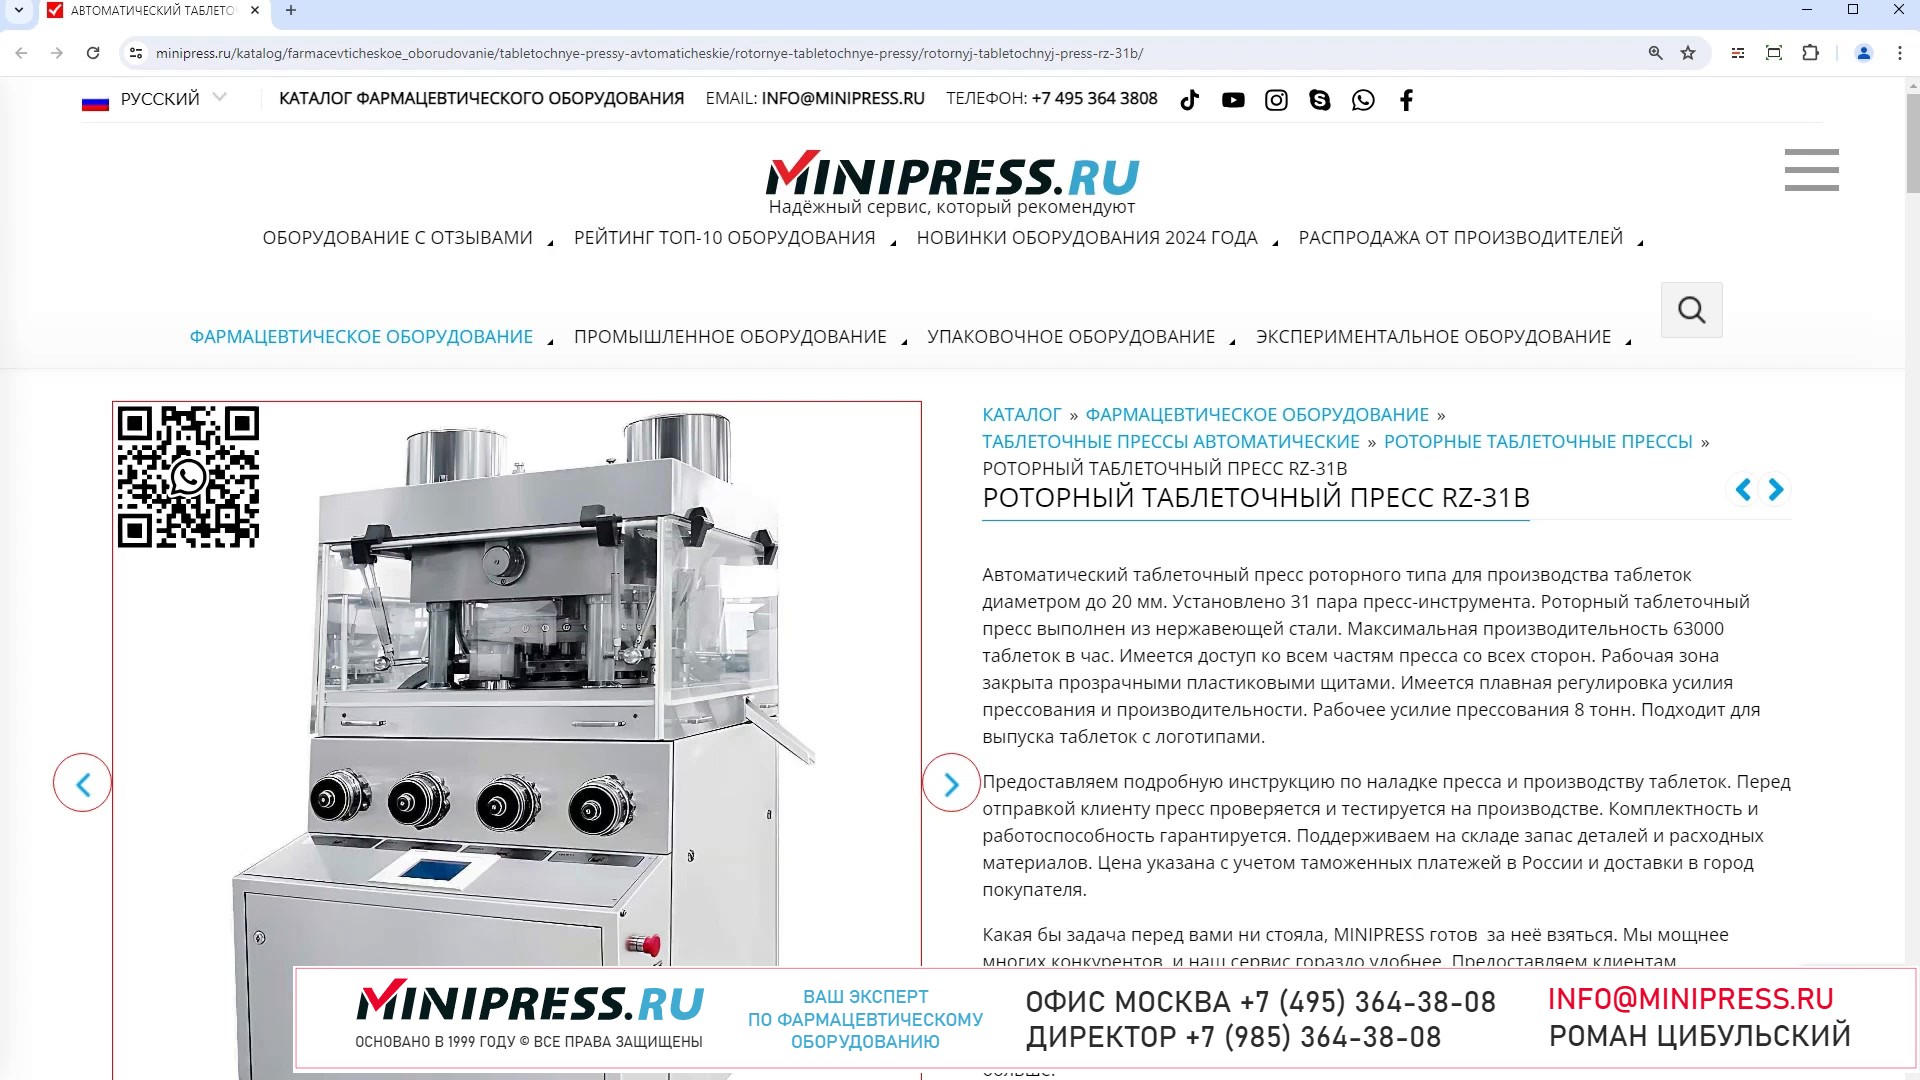 Minipress.ru Роторный таблеточный пресс RZ-31B